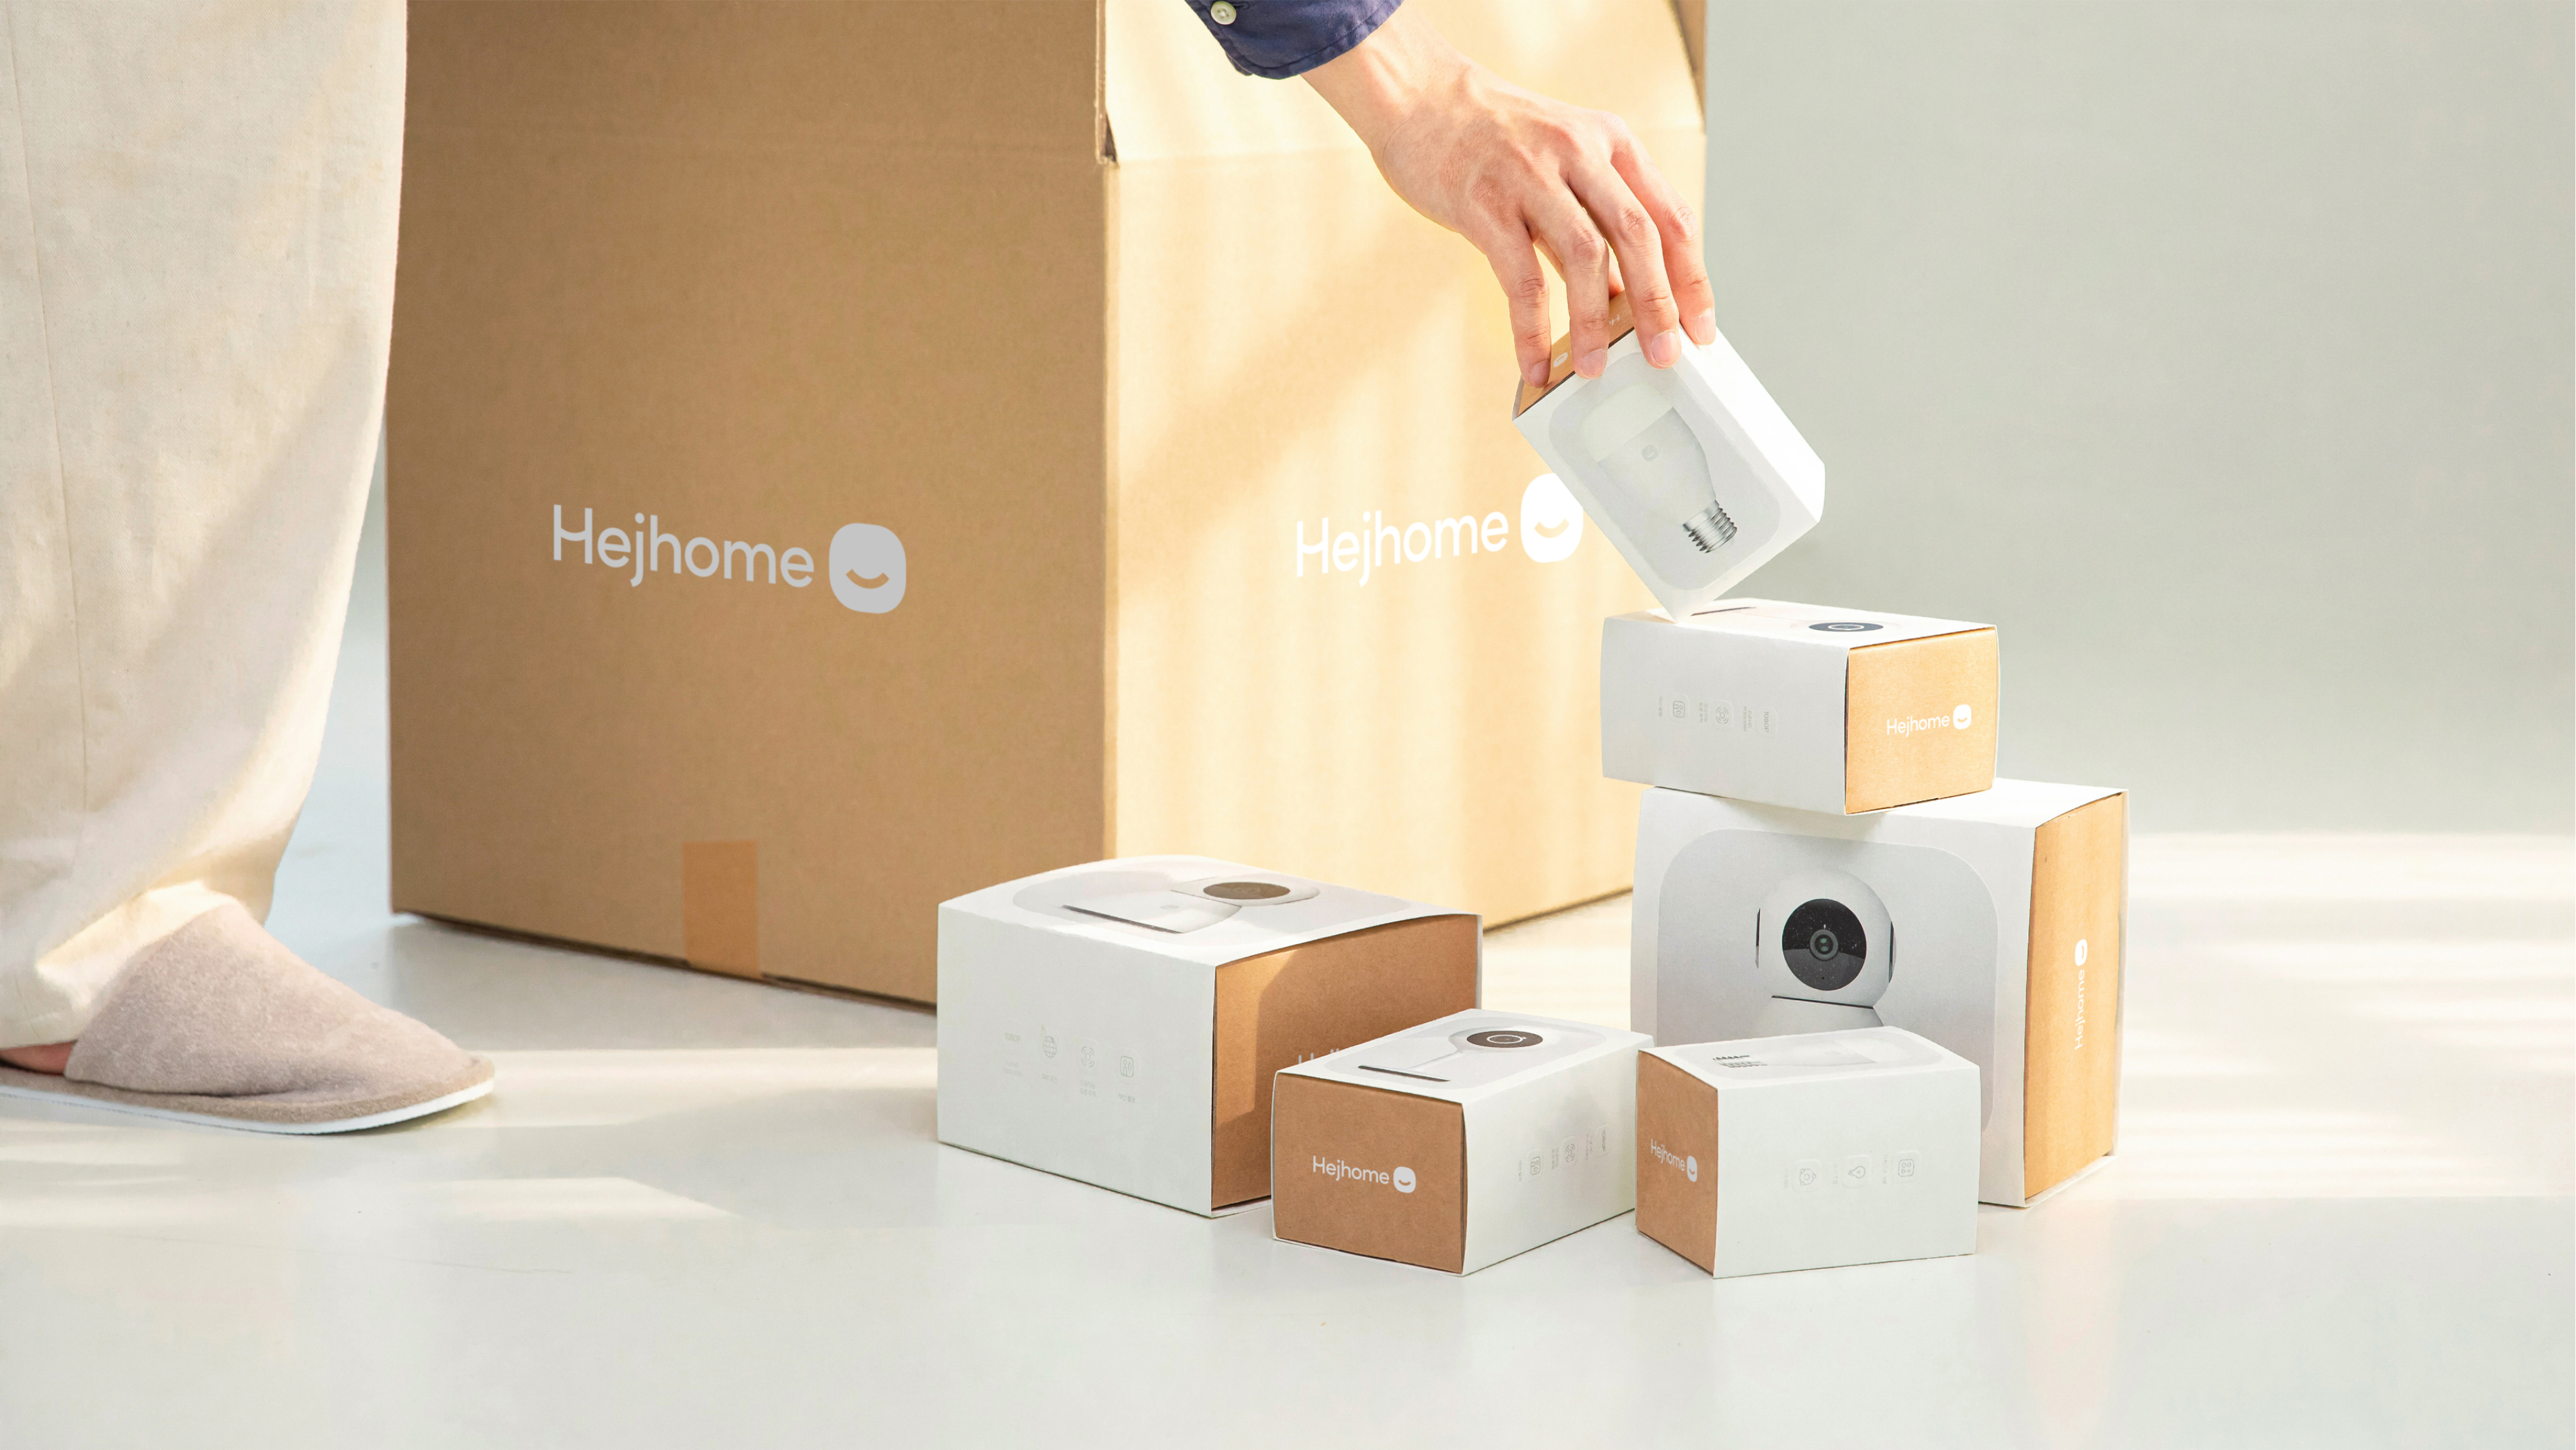 Hejhome - IoT Lifestyle Brand Renewal